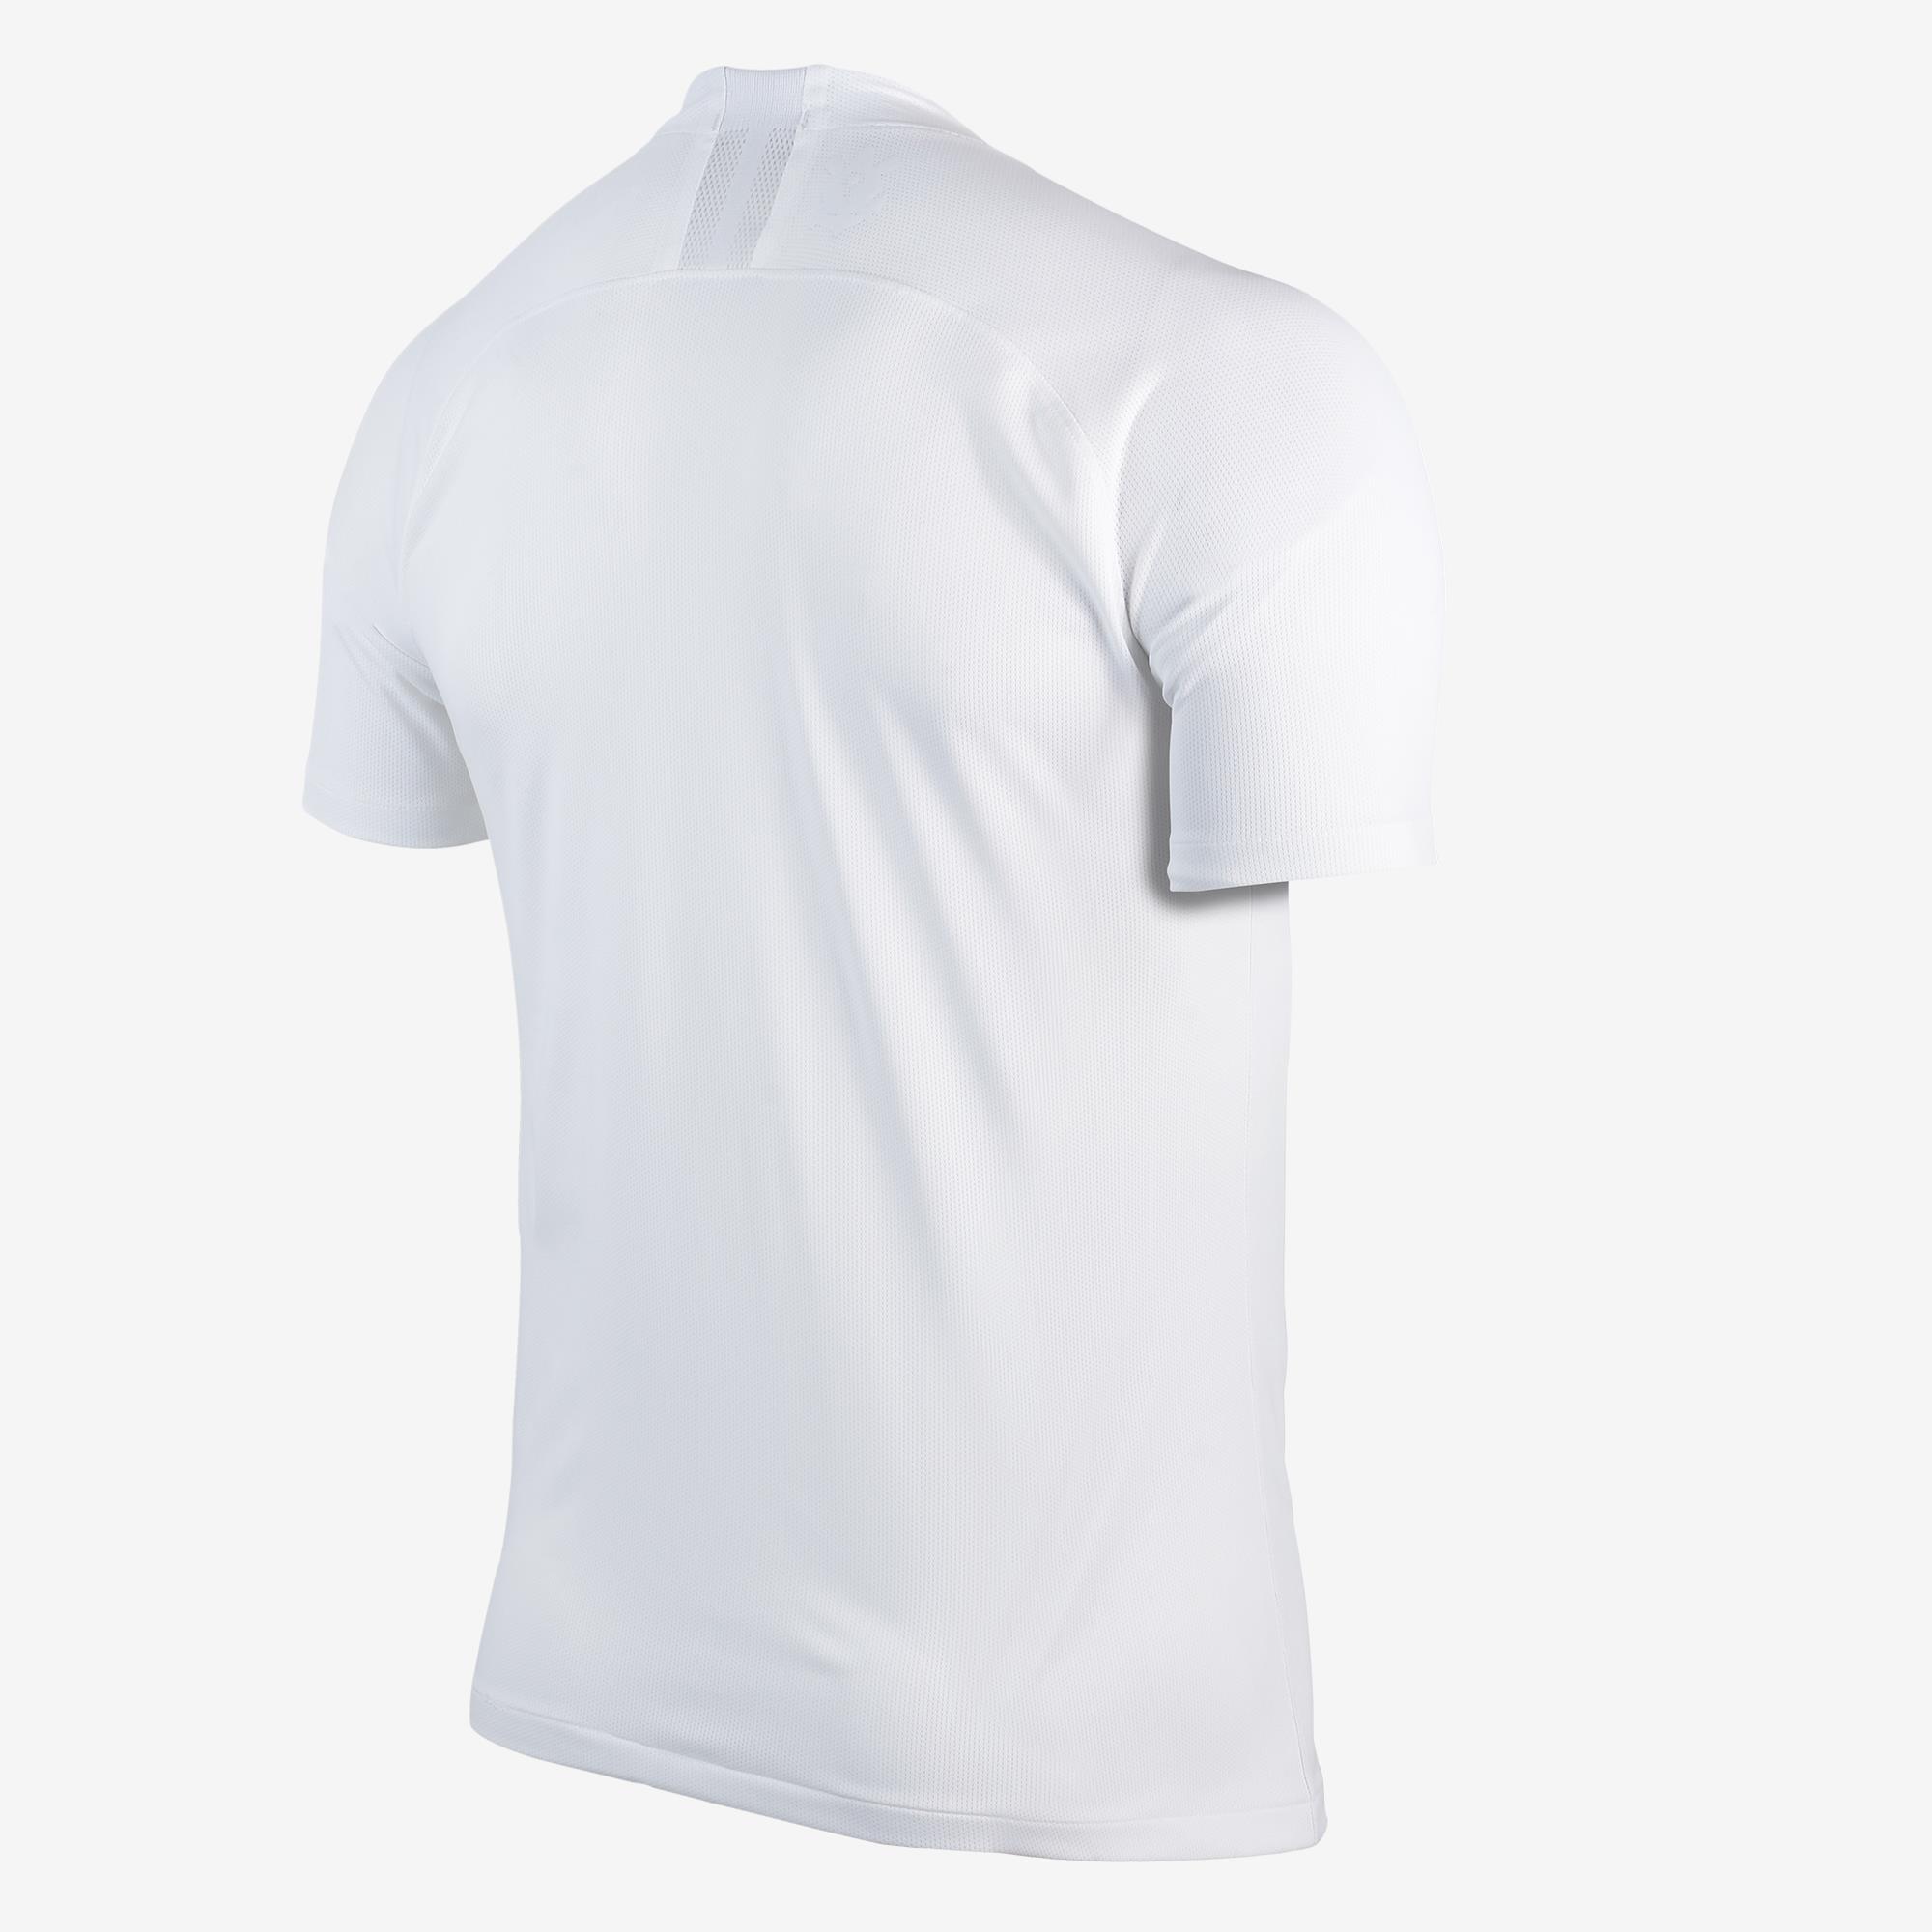 Corinthians 2019 Nike Home Kit | 19/20 Kits | Football shirt blog